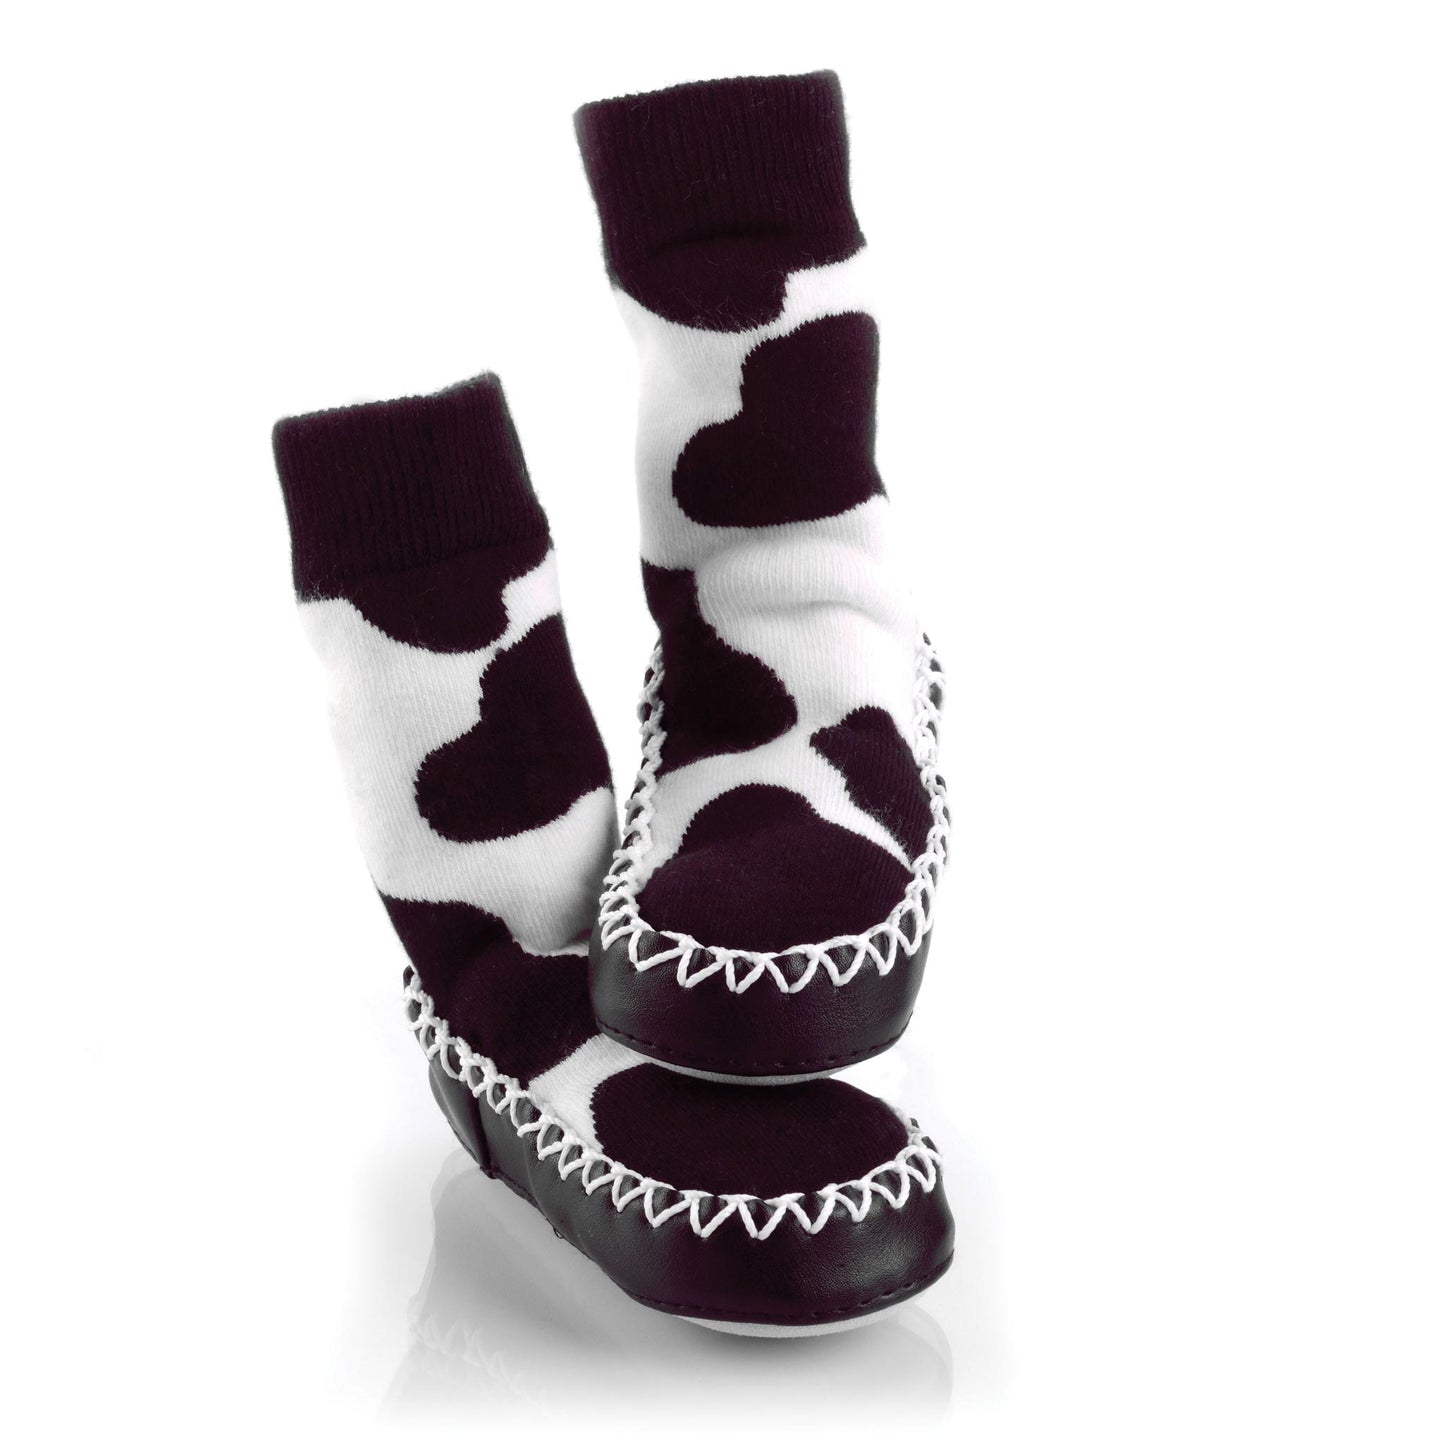 Mocc Ons Slipper Socks (Cow Print)